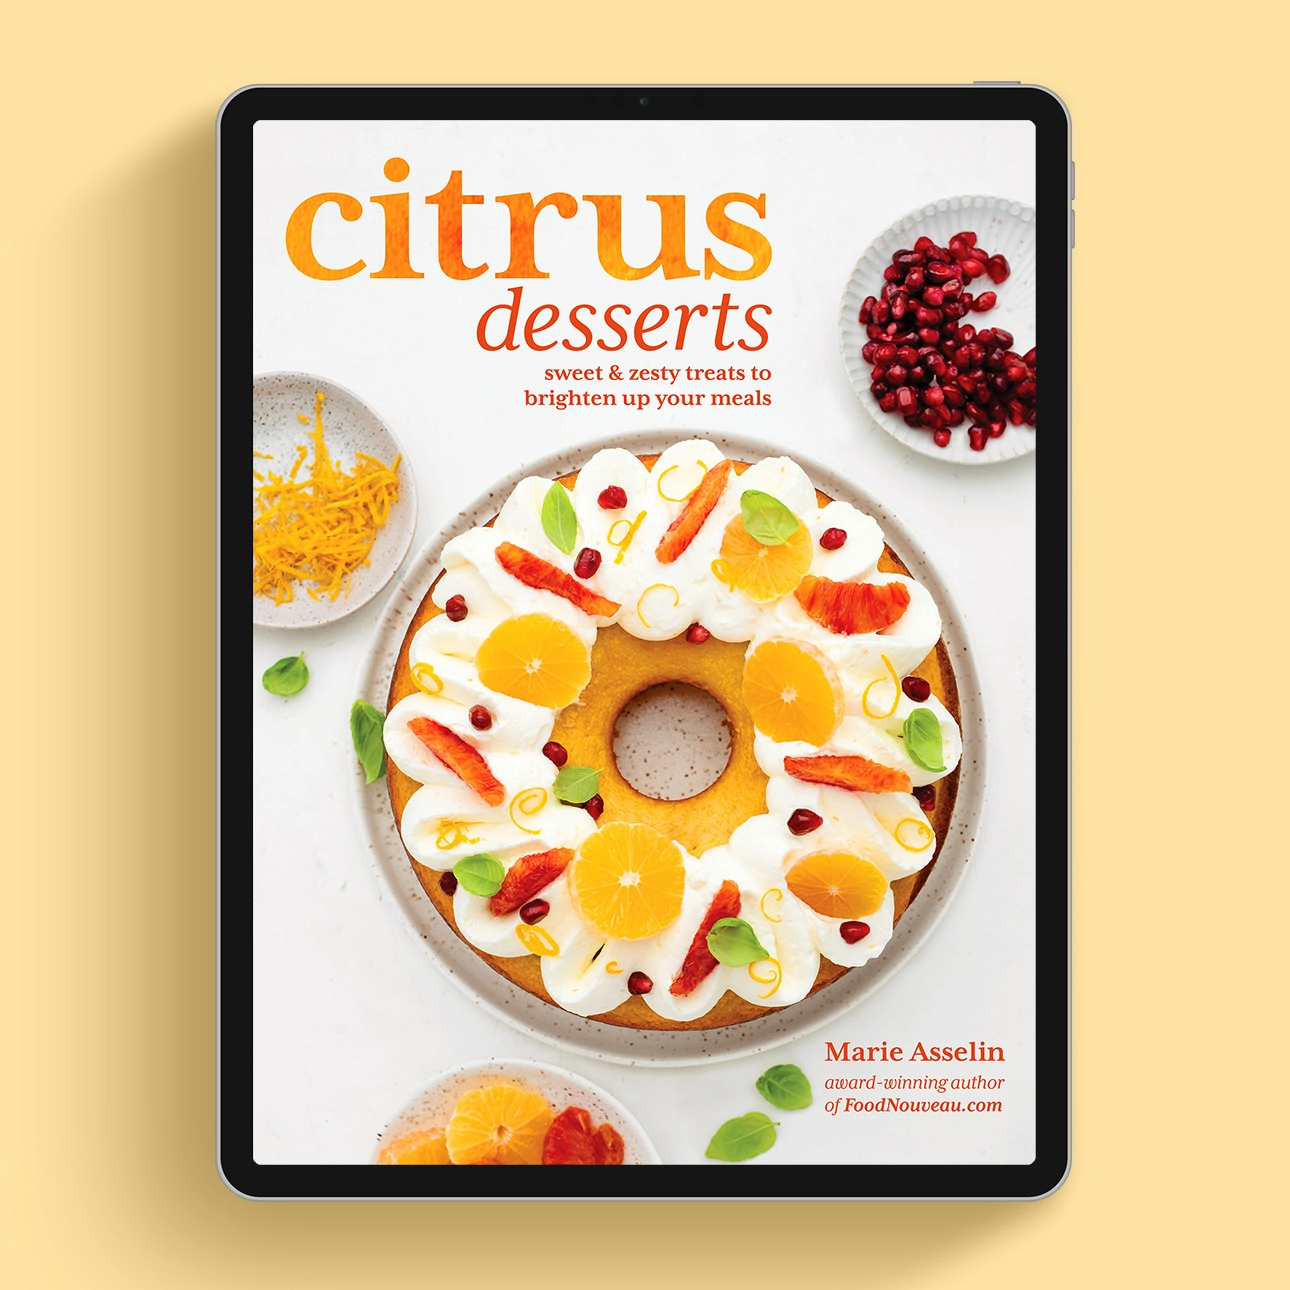 Citrus Desserts: Sweet & Zesty Treats to Brighten Up Your Meals, an eBook by Marie Asselin, Award-Winning Author of FoodNouveau.com